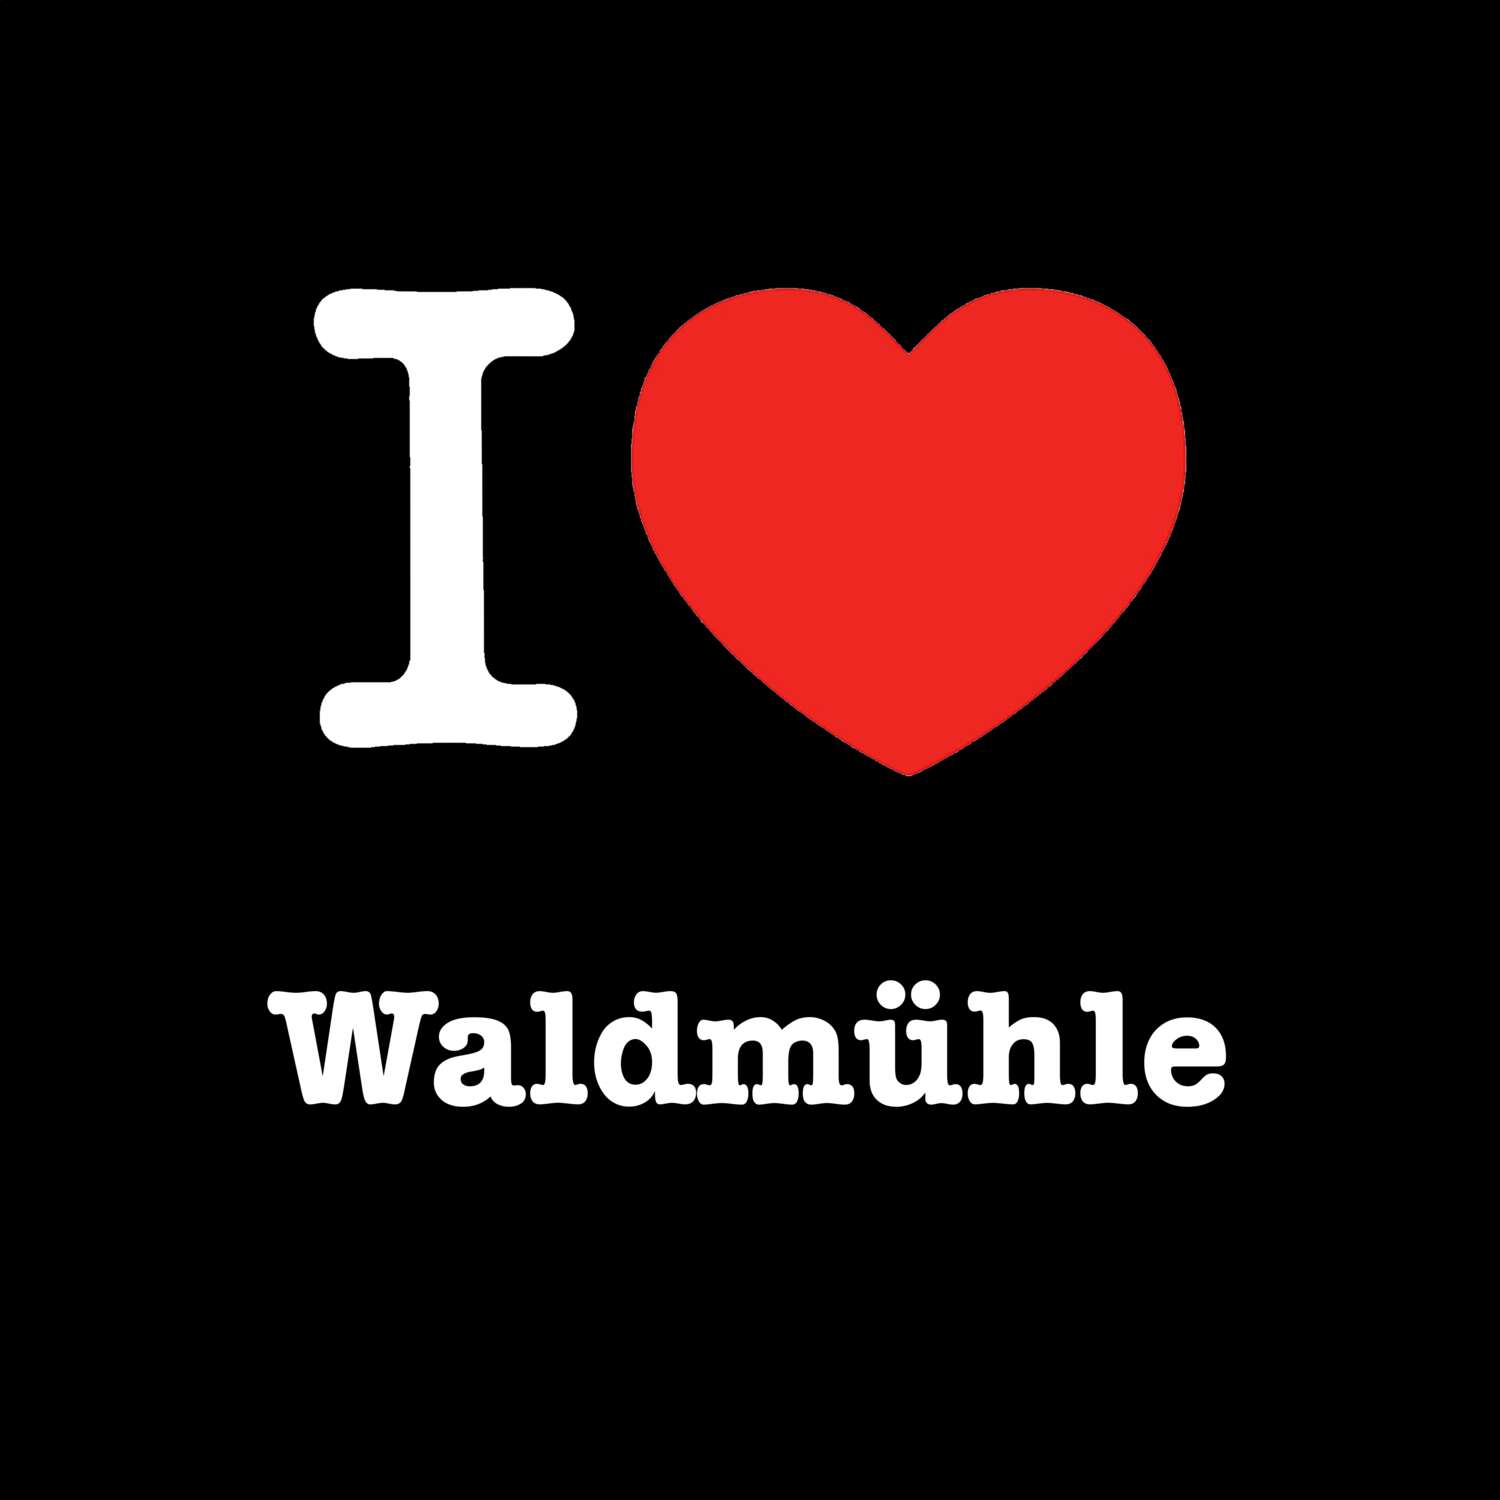 Waldmühle T-Shirt »I love«